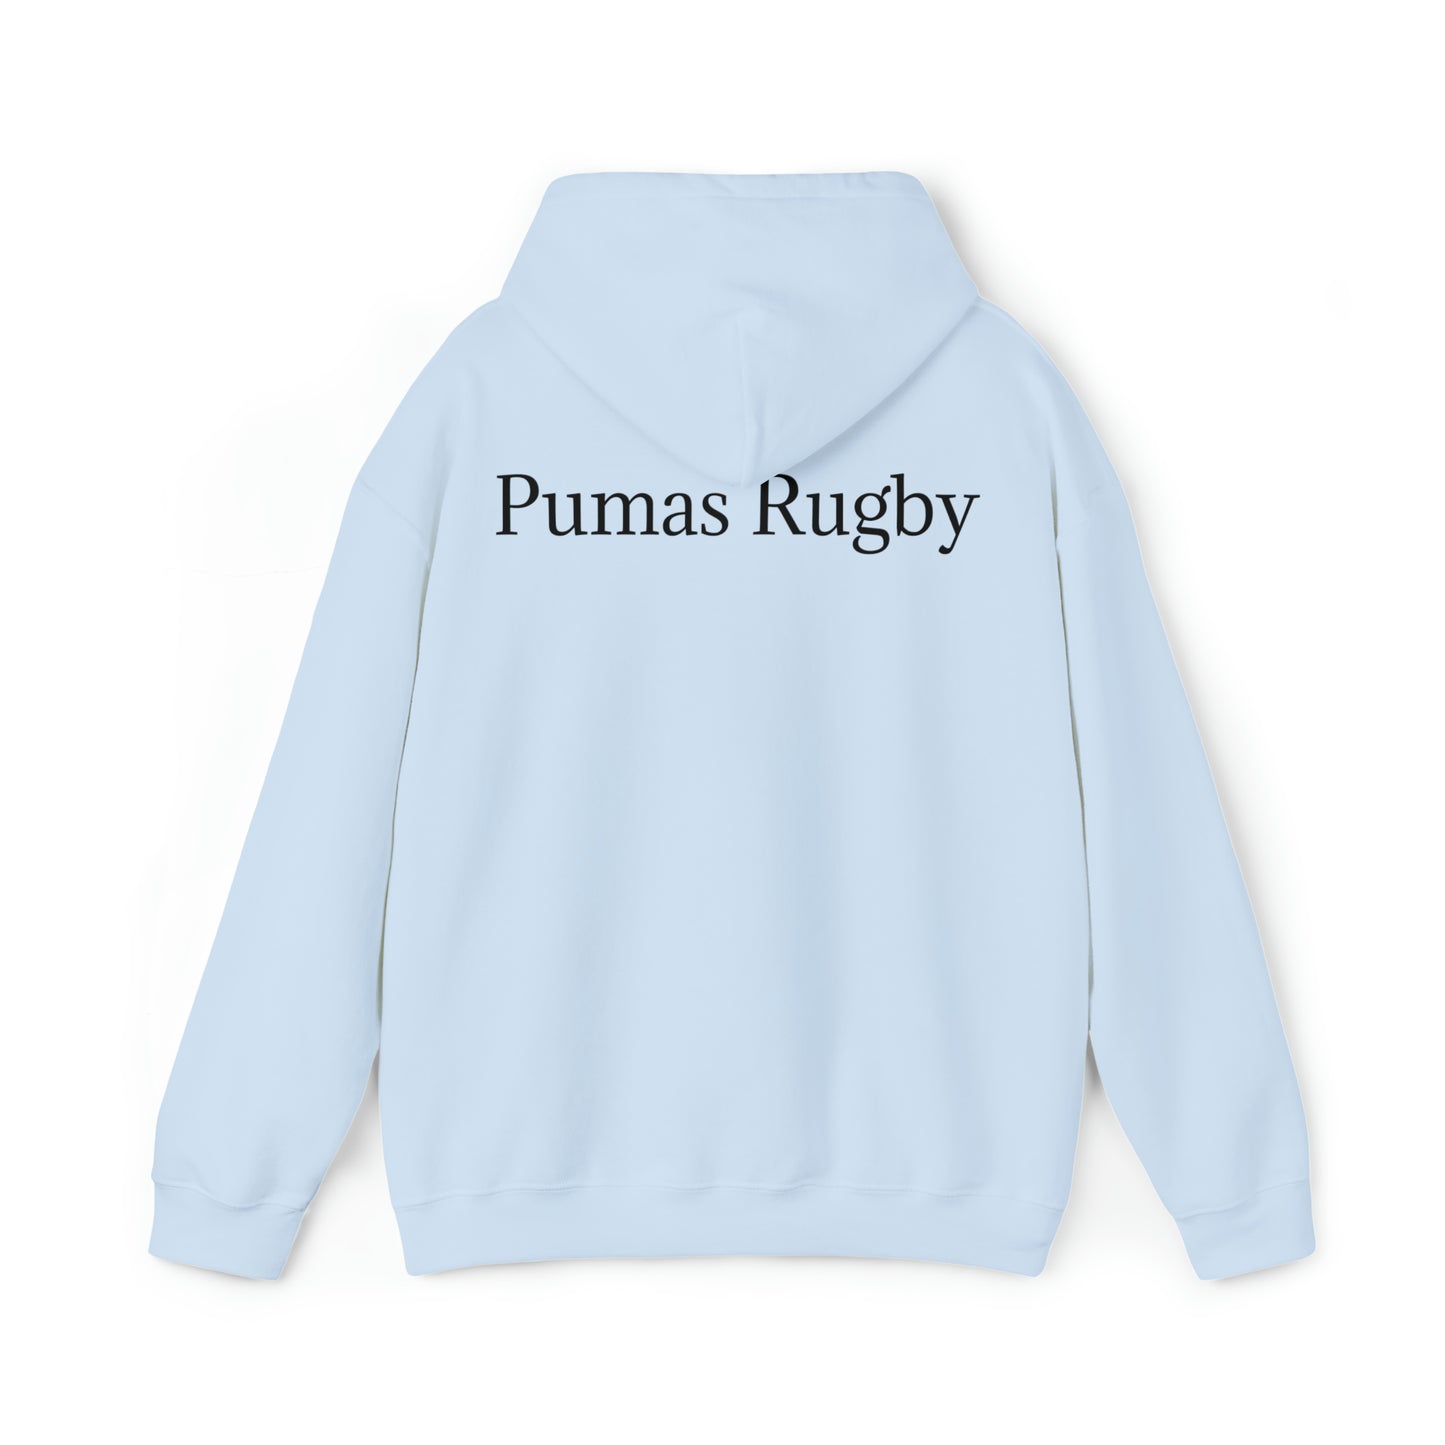 Pumas with RWC - light hoodies